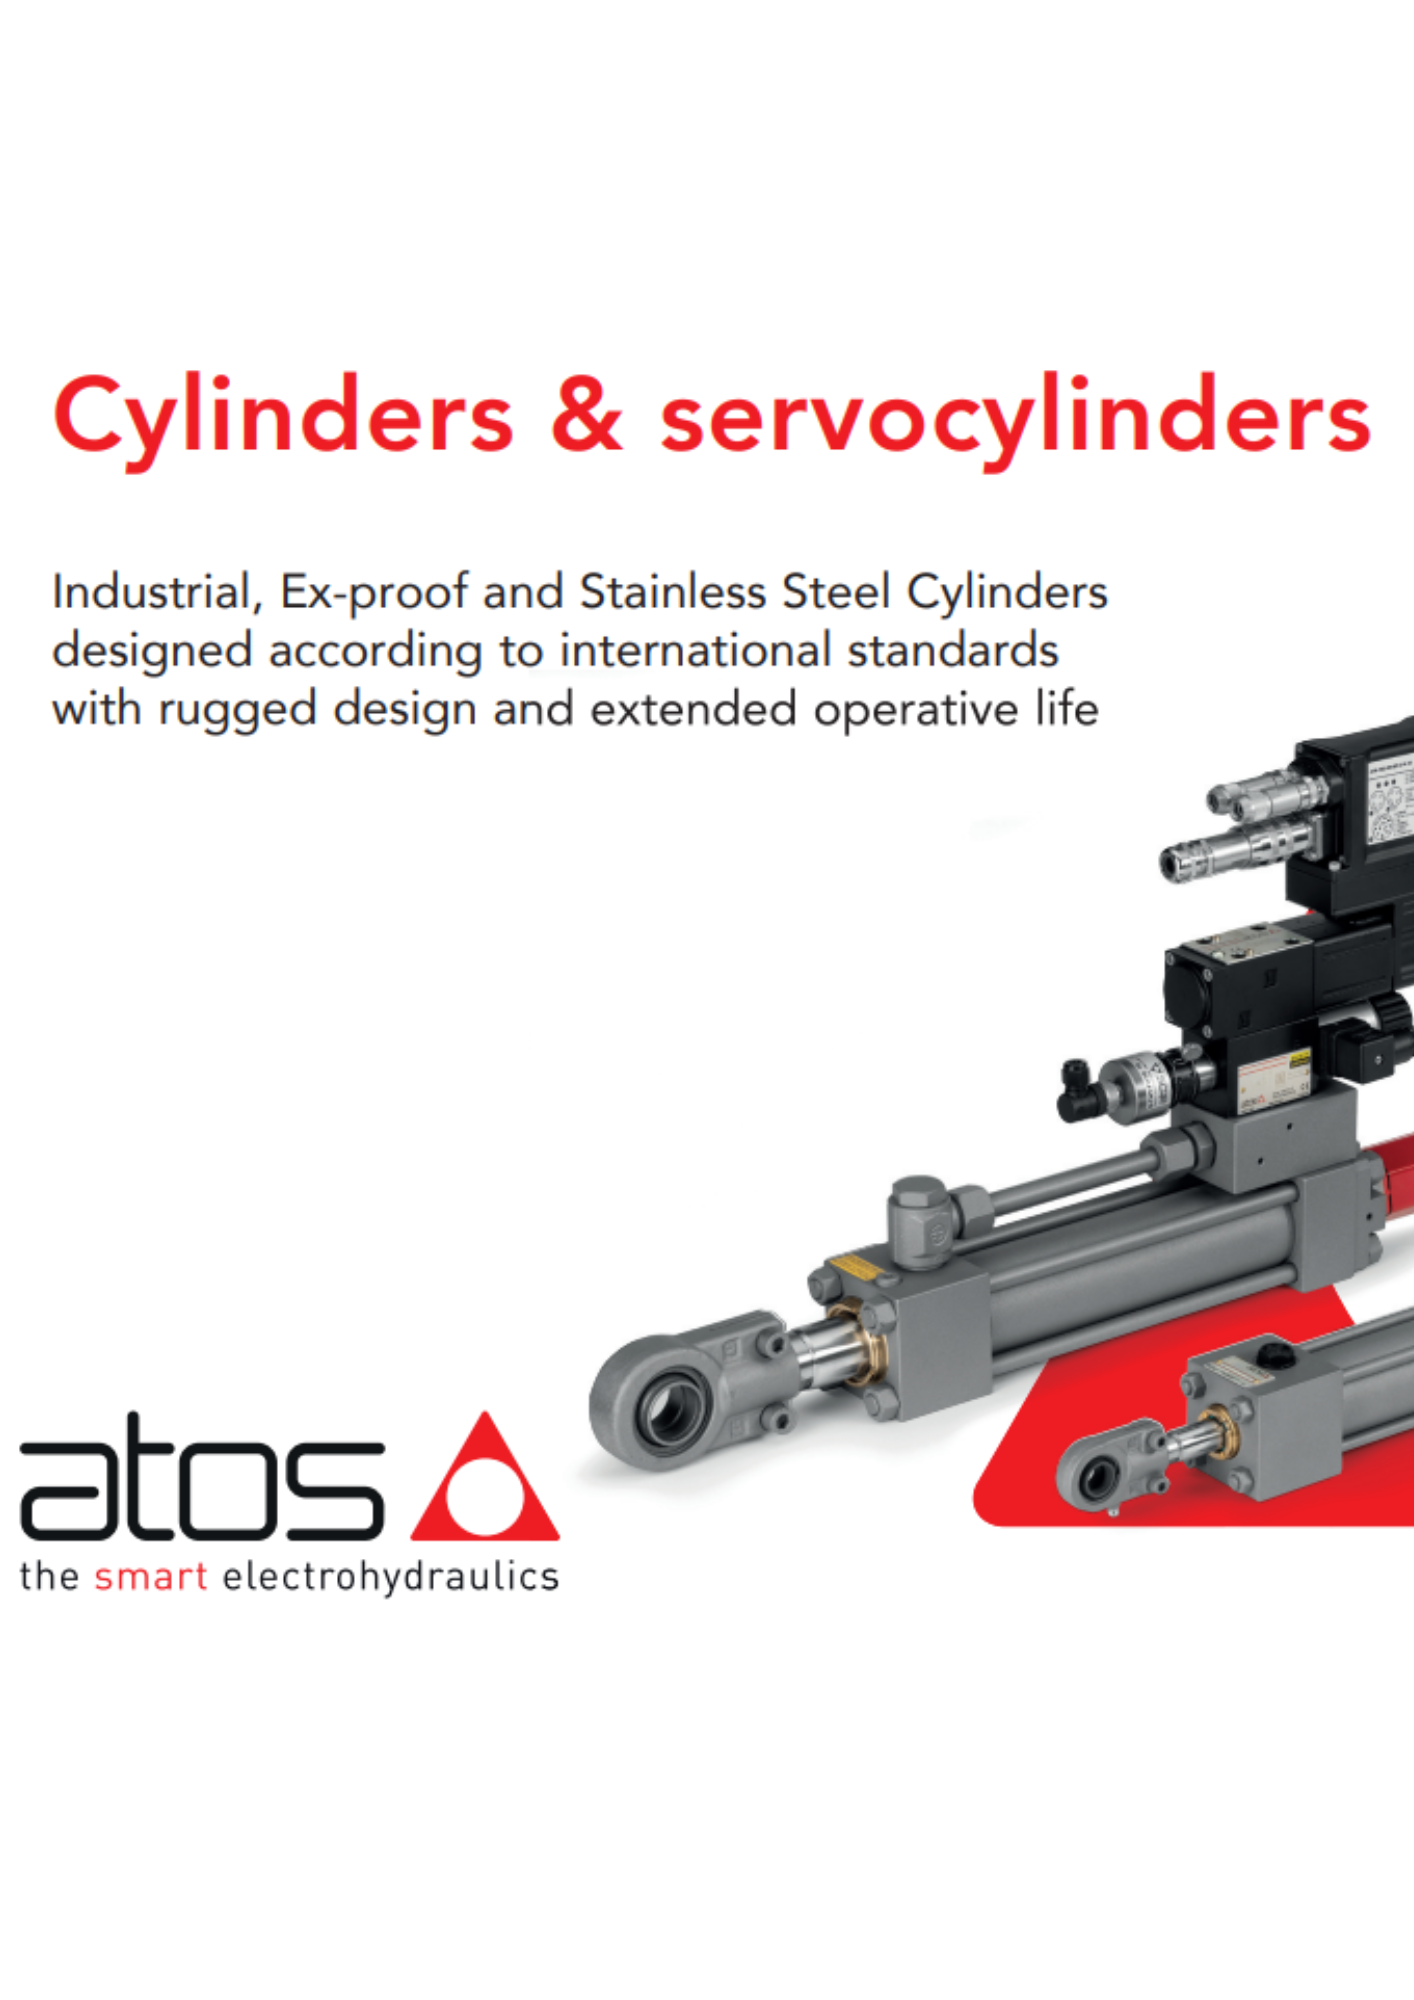 Atos: cylinders and servocylinders